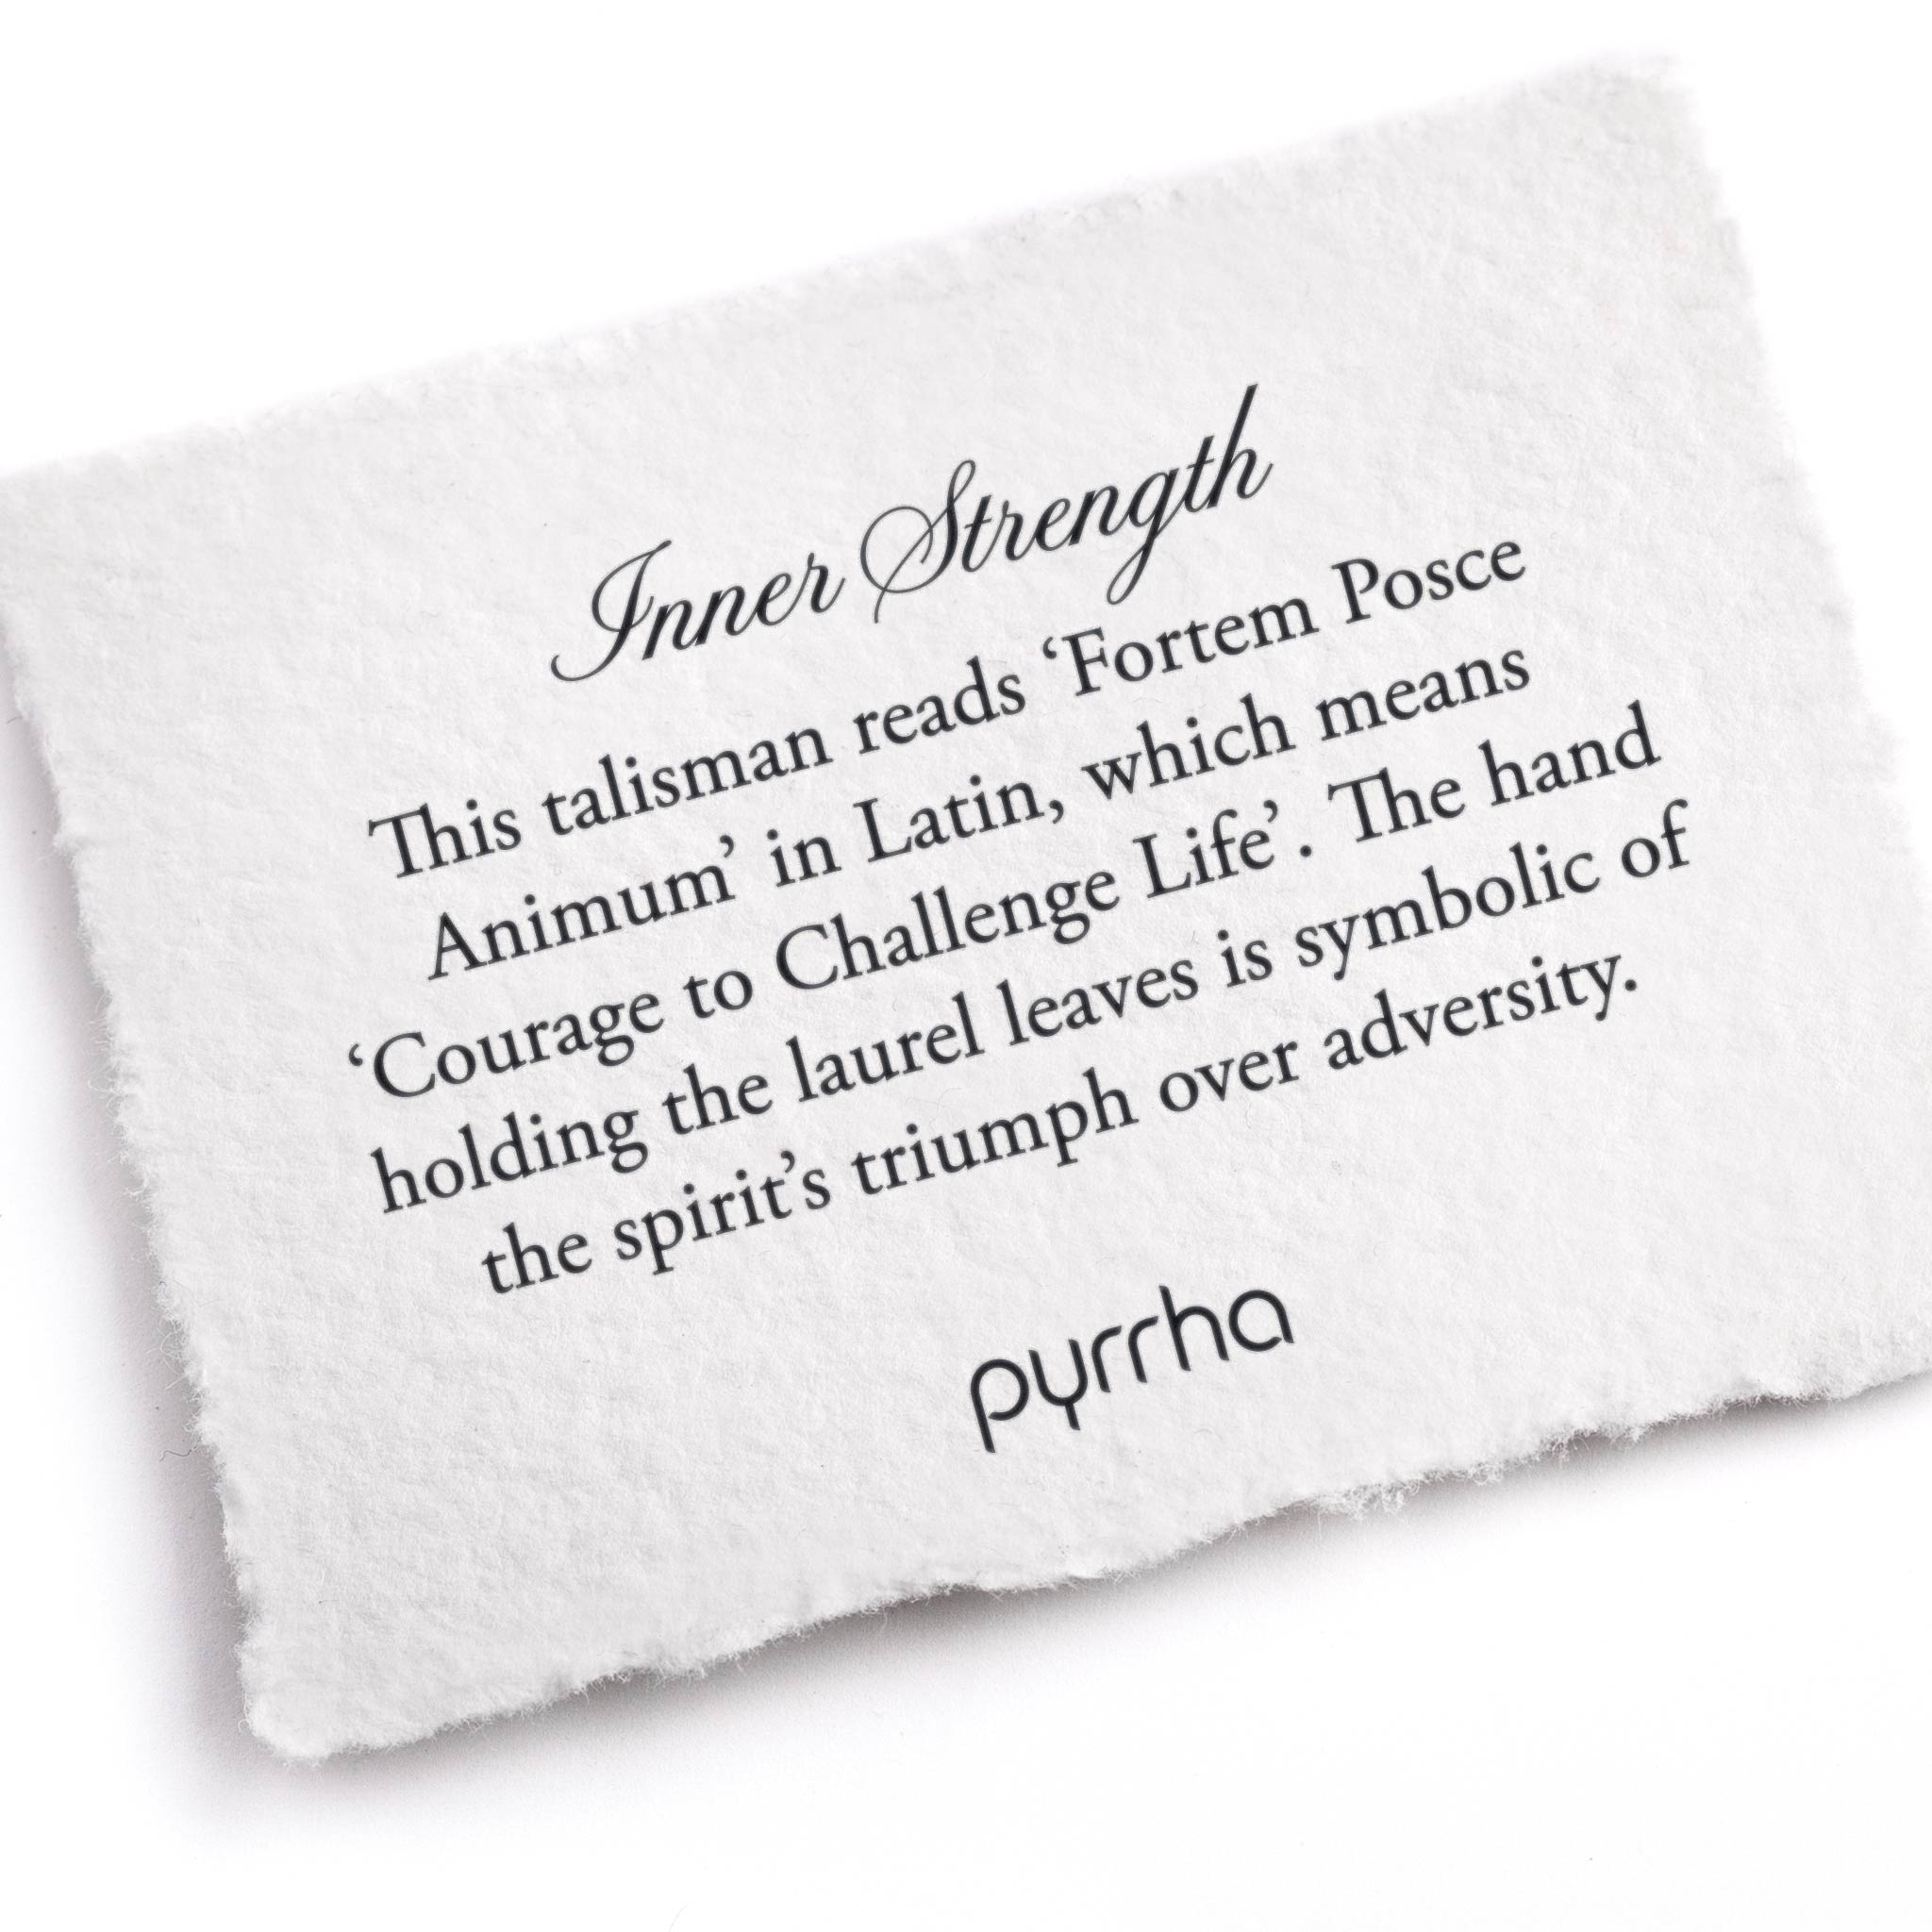 A hand-torn, letterpress printed card describing the meaning for Pyrrha's Inner Strength 14K Gold Talisman